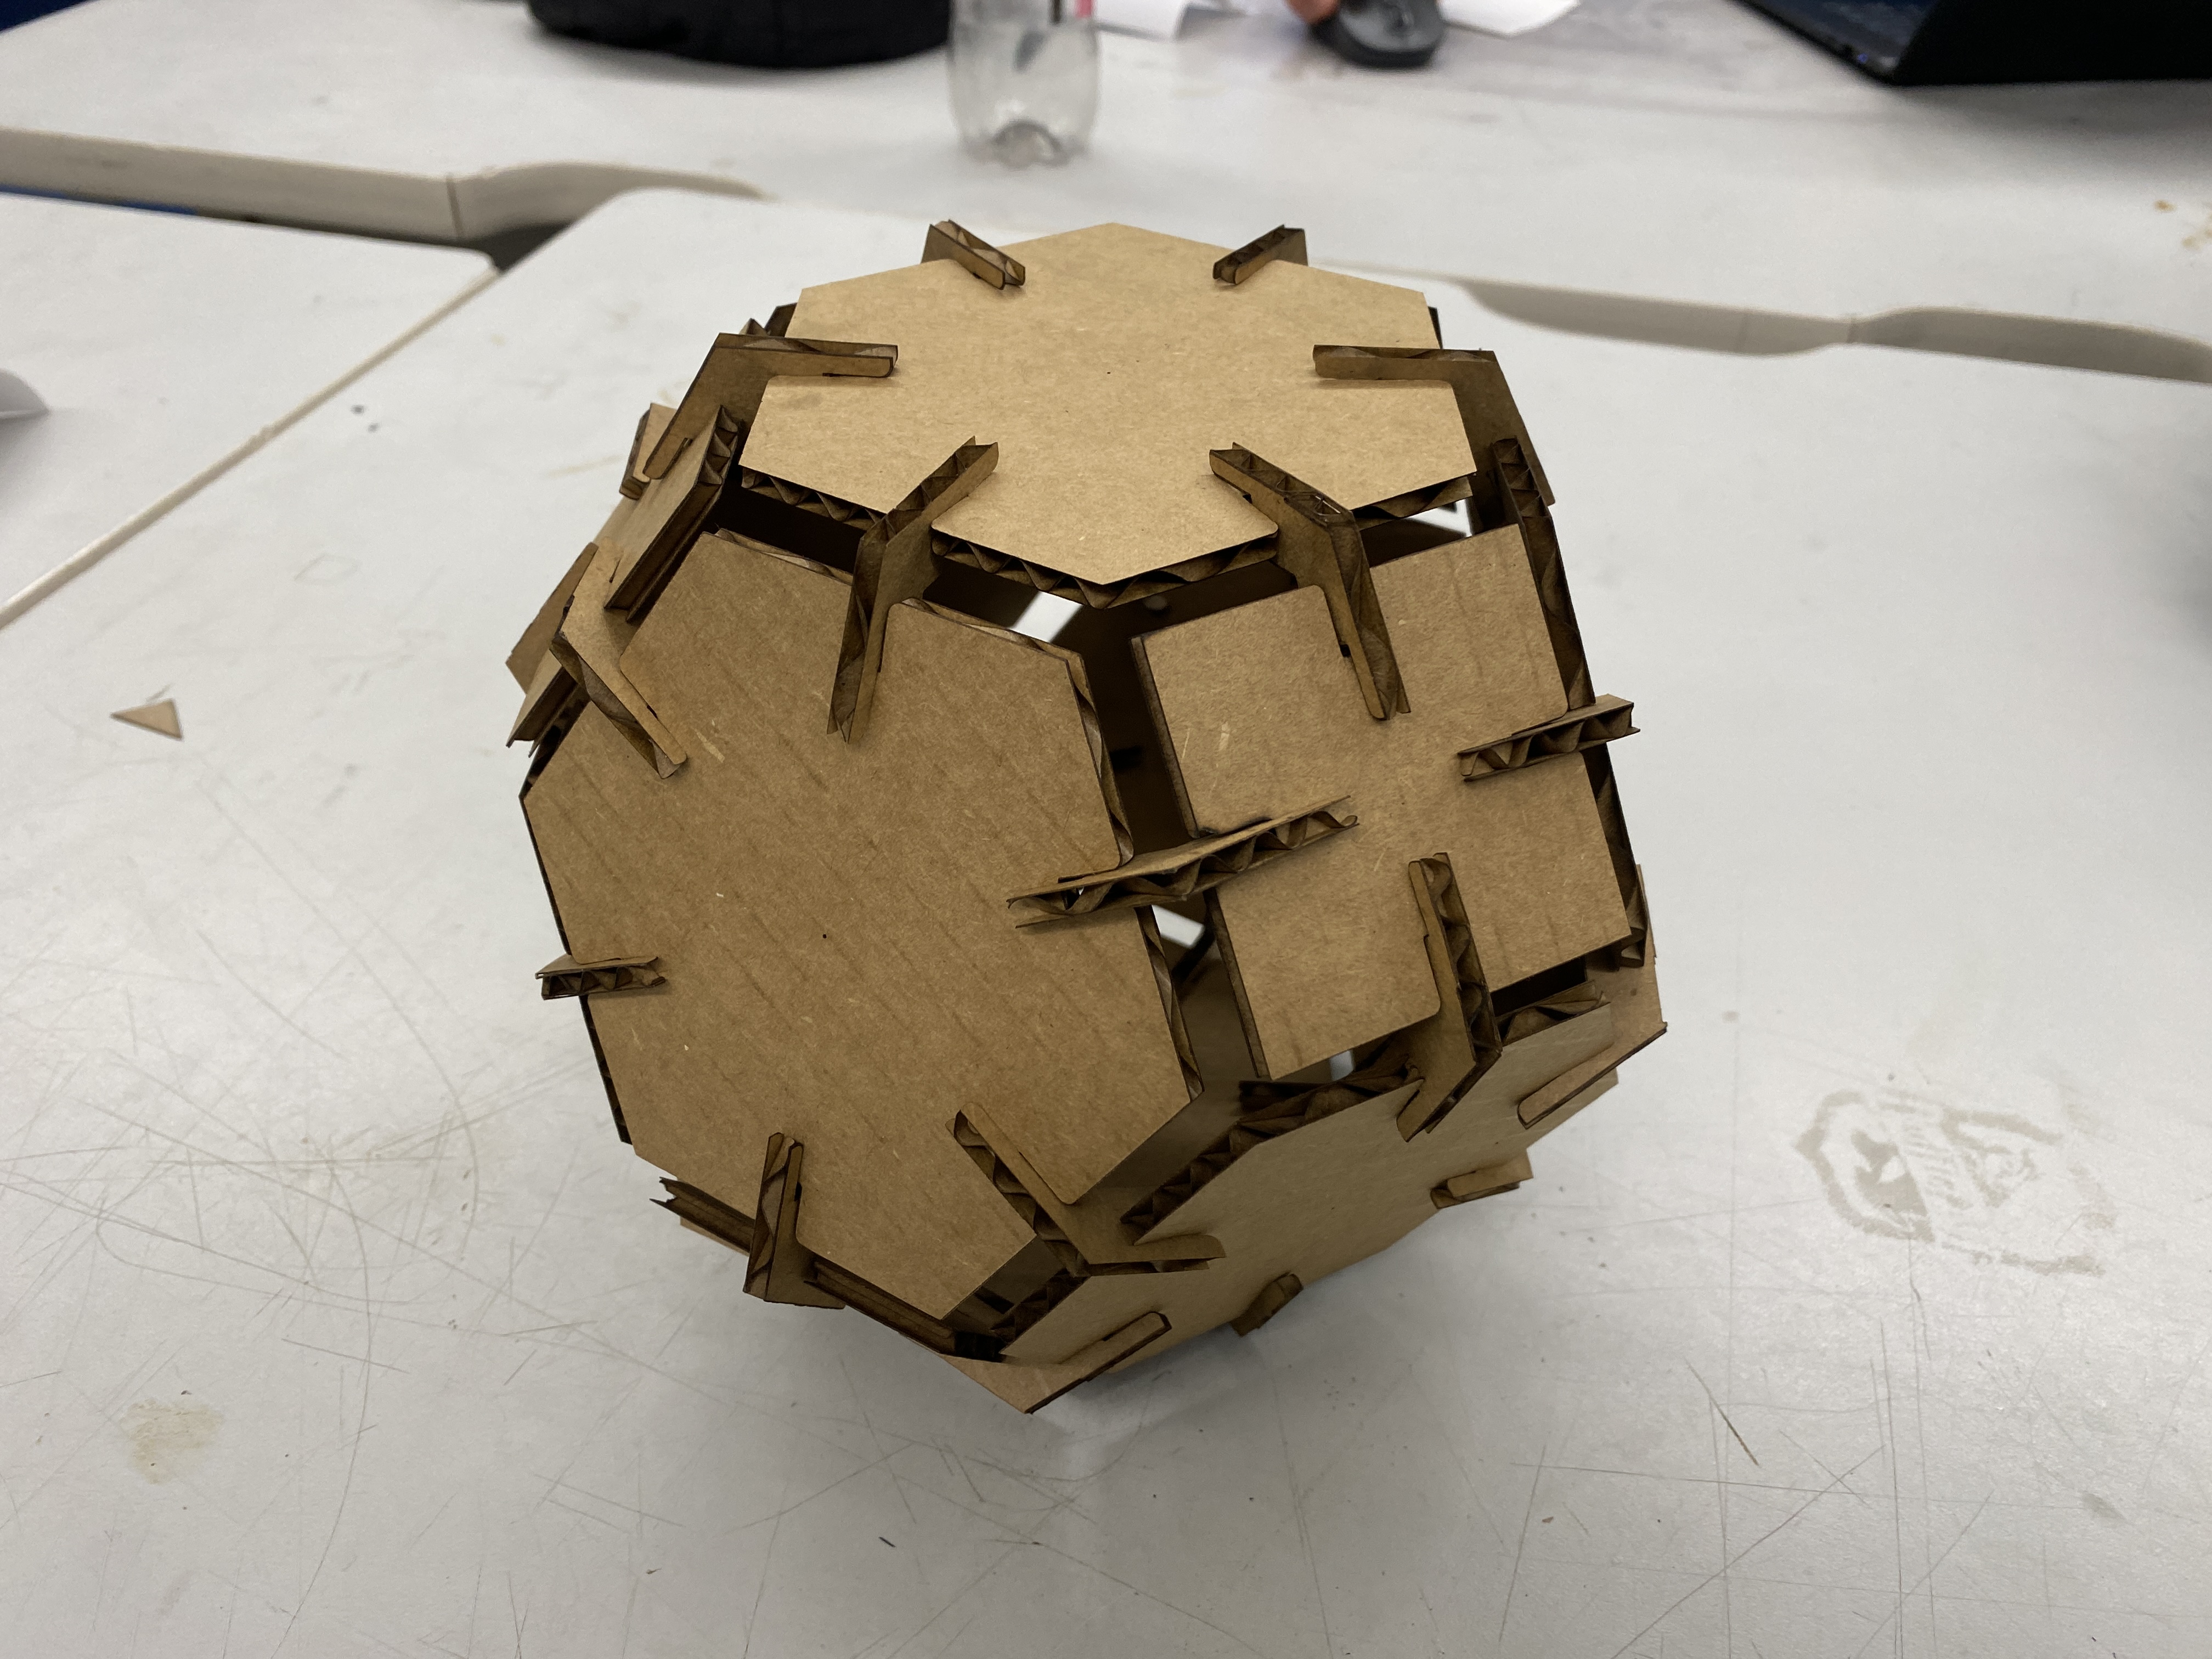 Assembled tetradecahedron